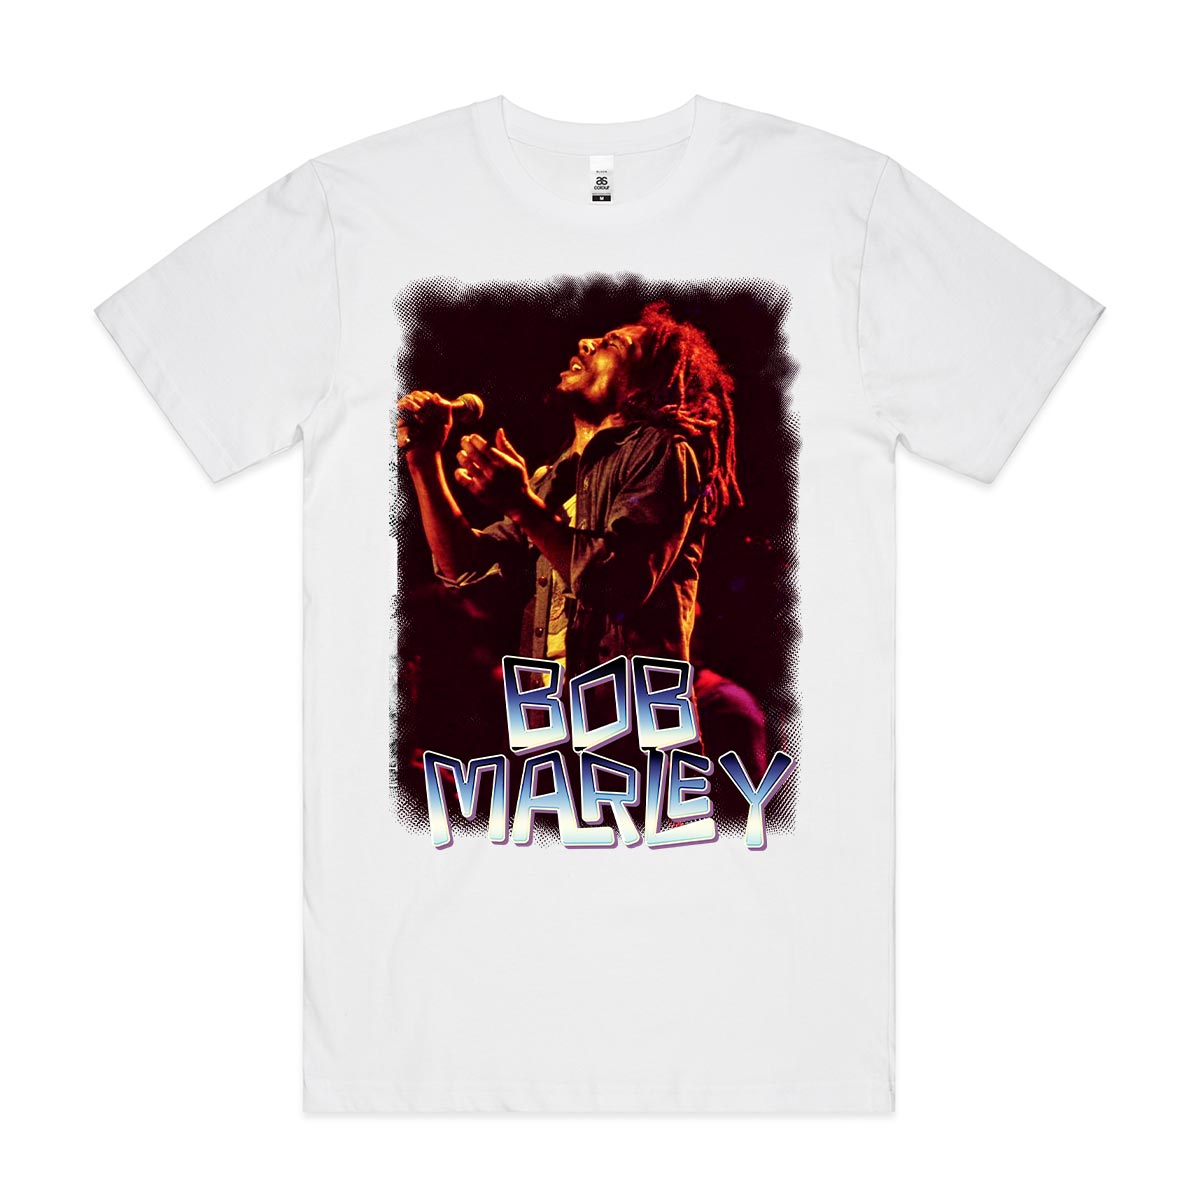 Bob Marley 03 T-Shirt Family Fan Music Rock & Roll Culture